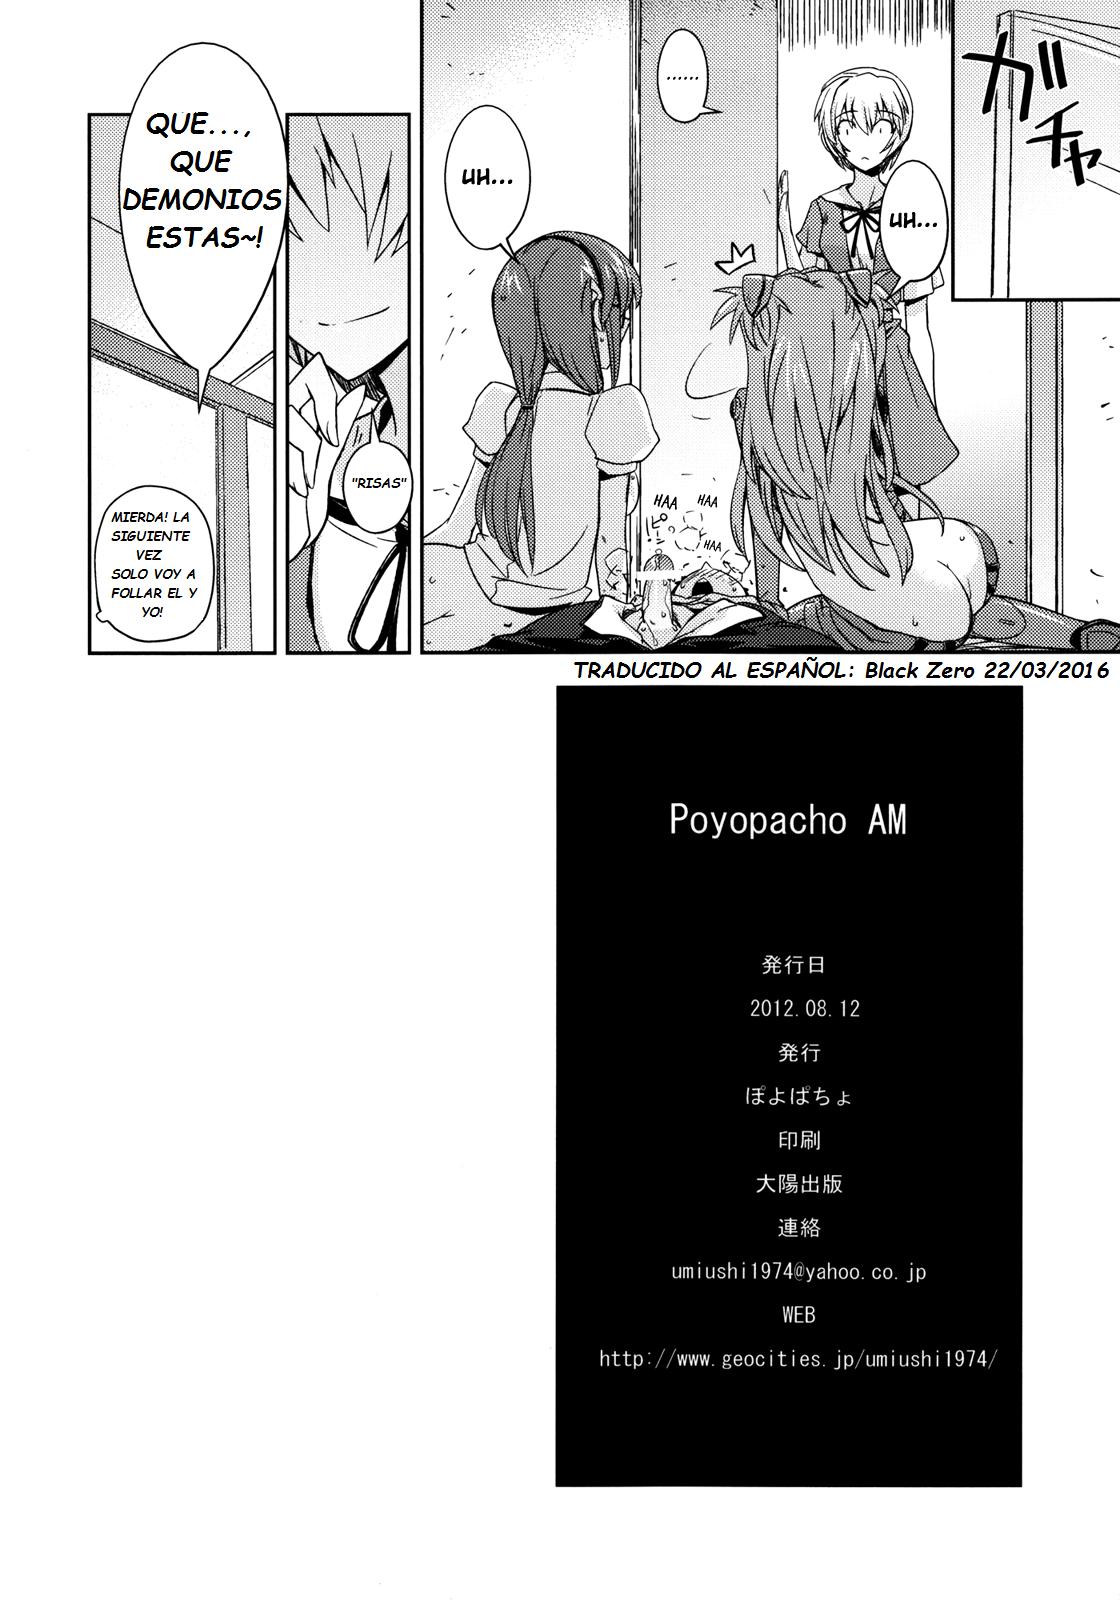 Poyopacho AM Chapter-1 - 19